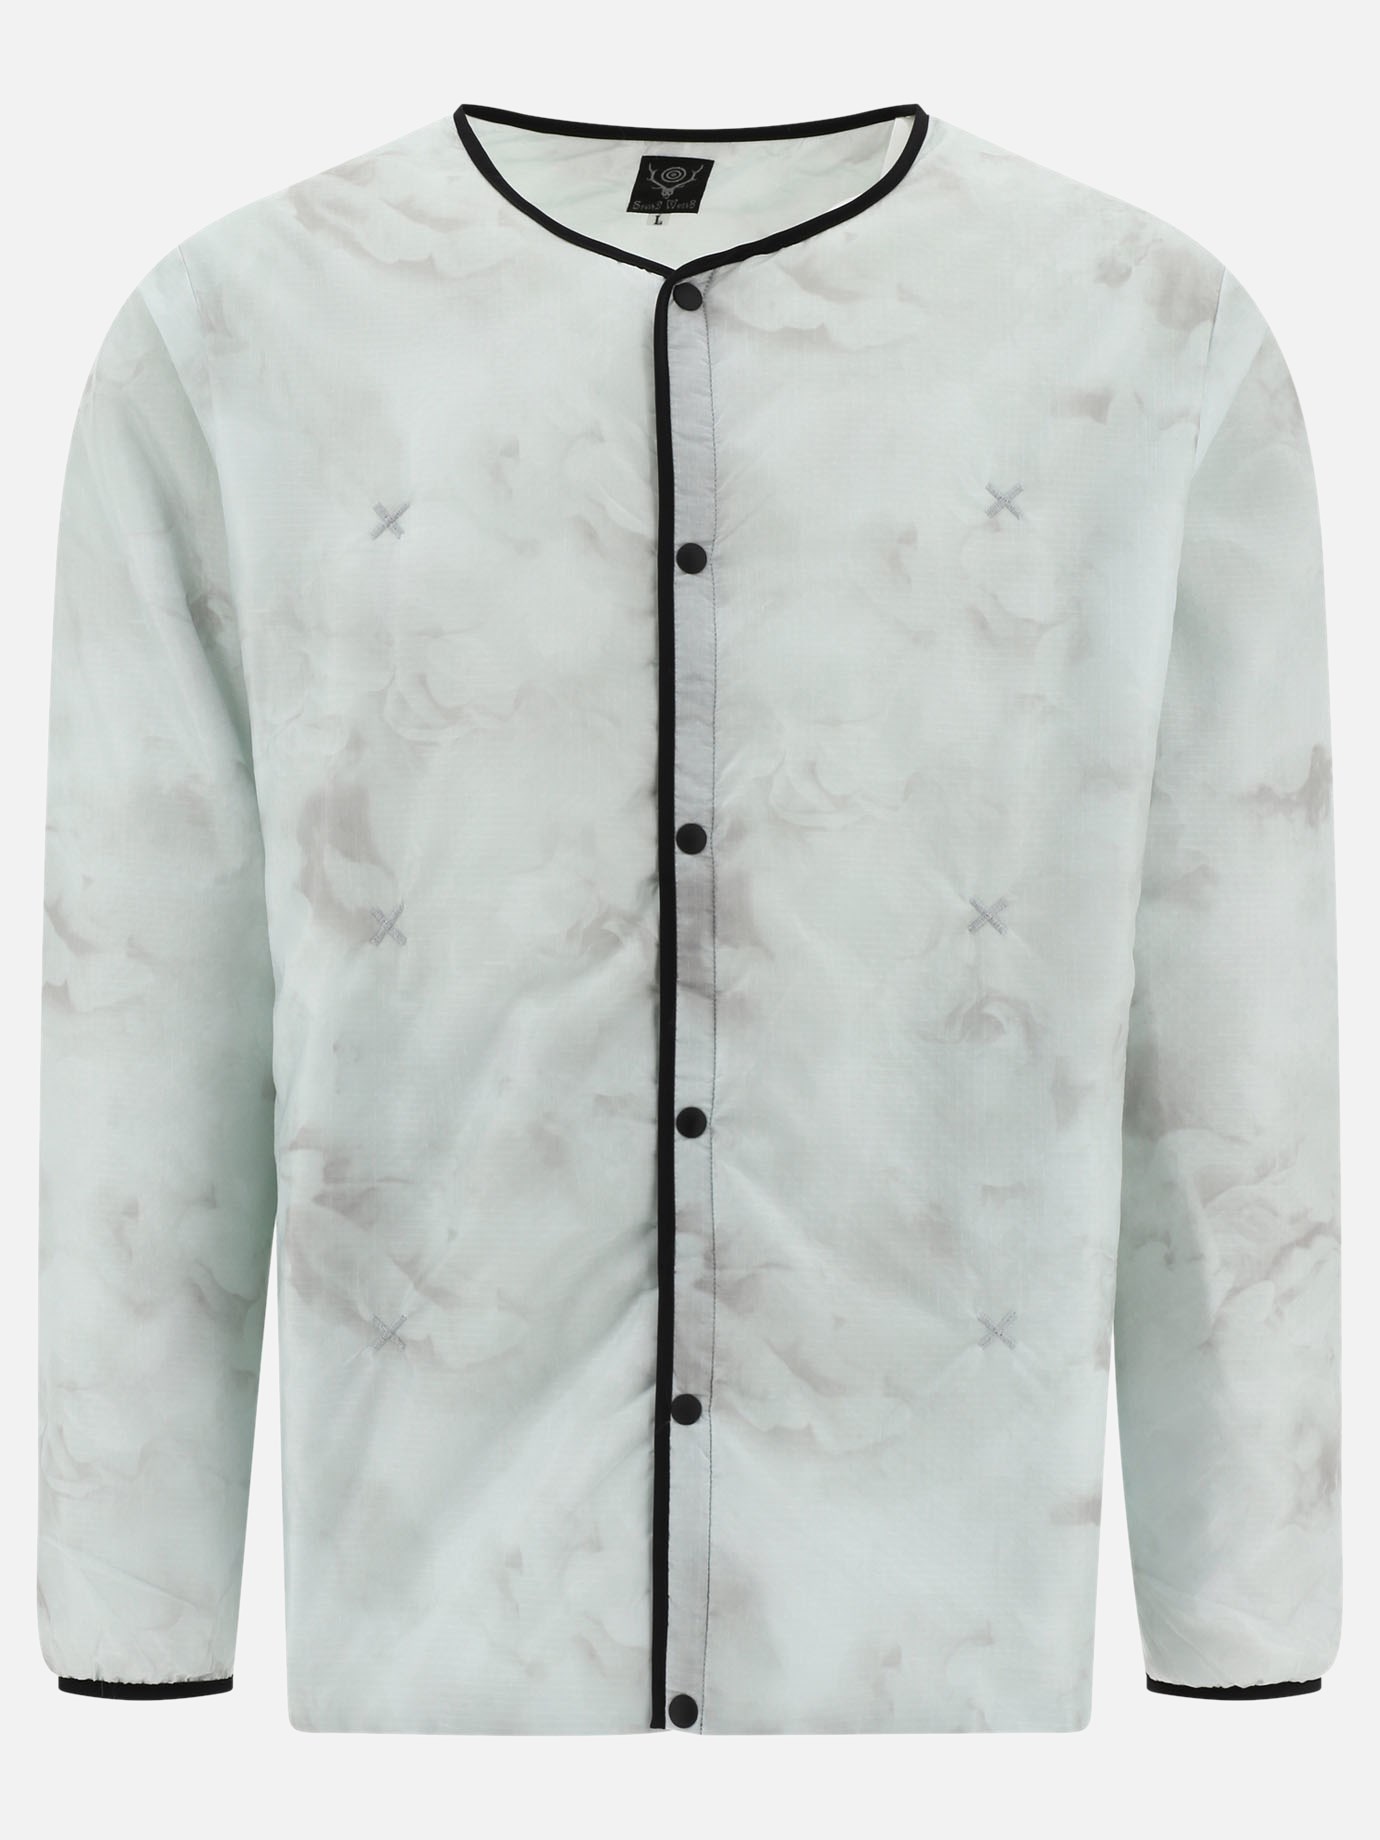 Windbreaker jacket with contrasting profiles